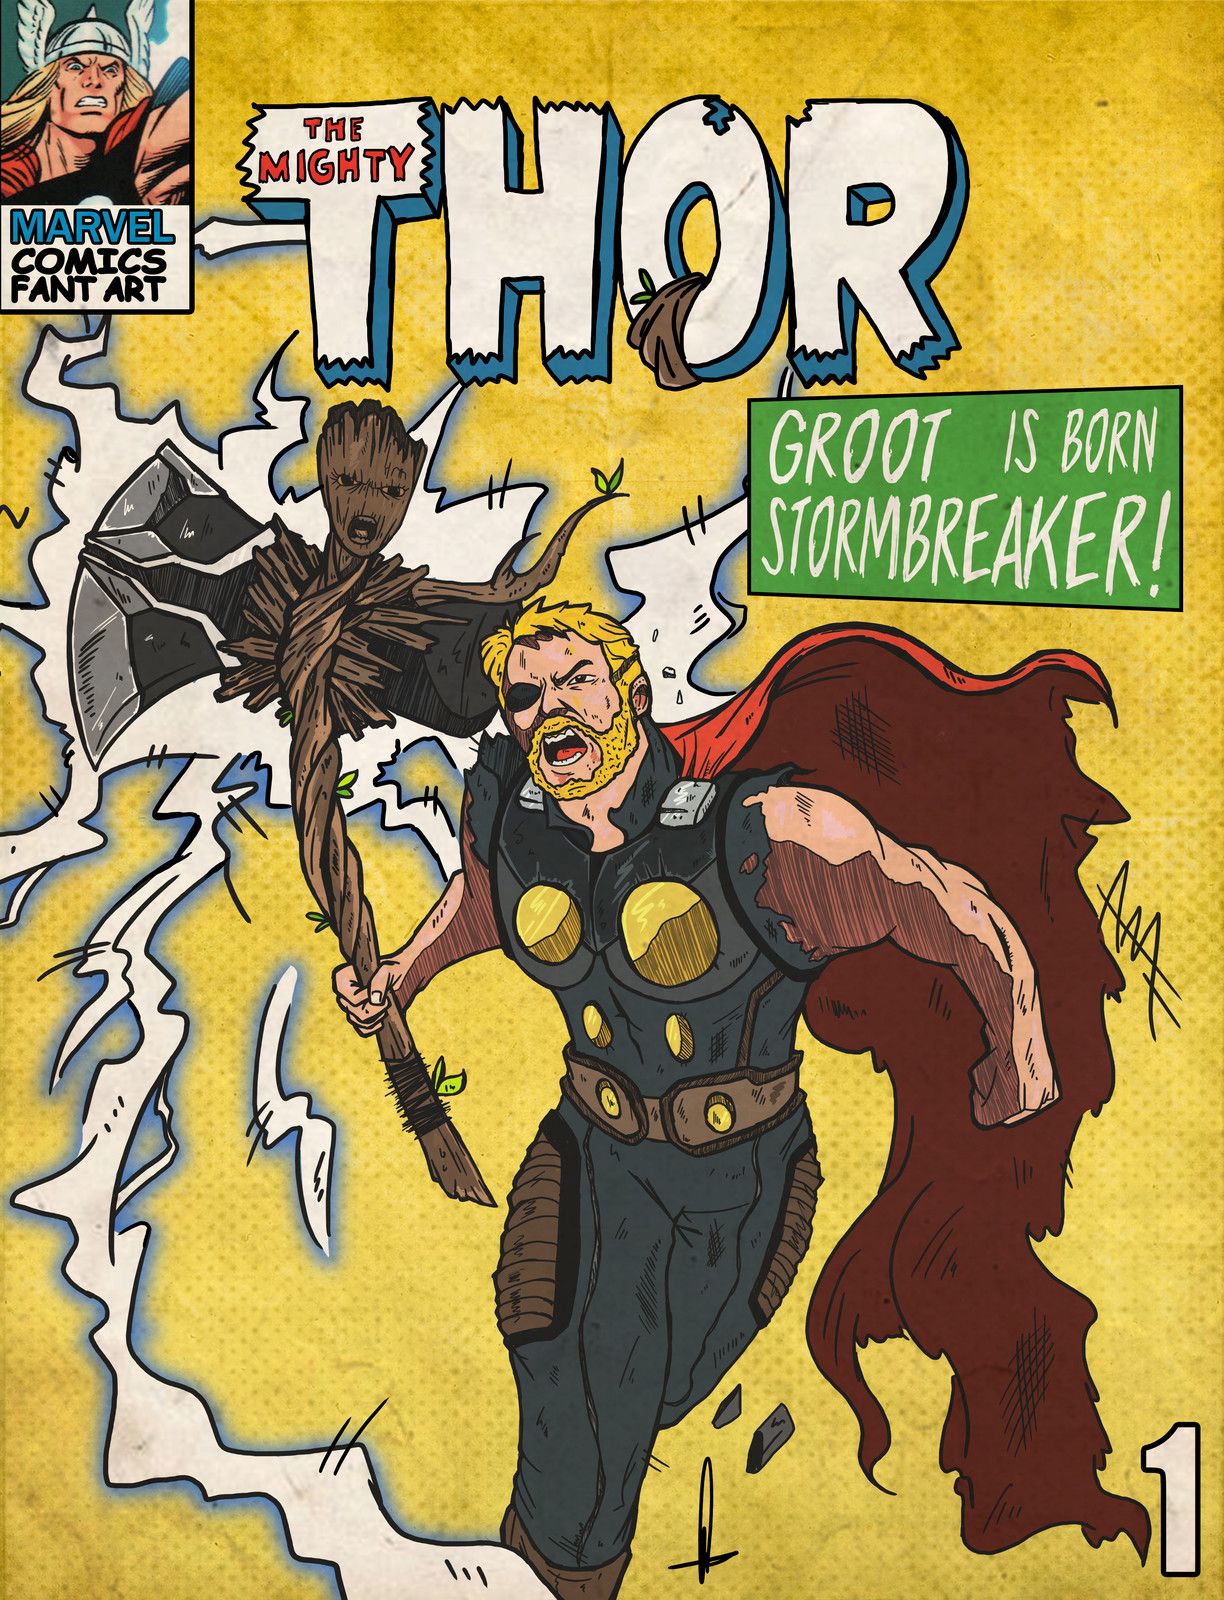 Thor Groot, Sean Gore